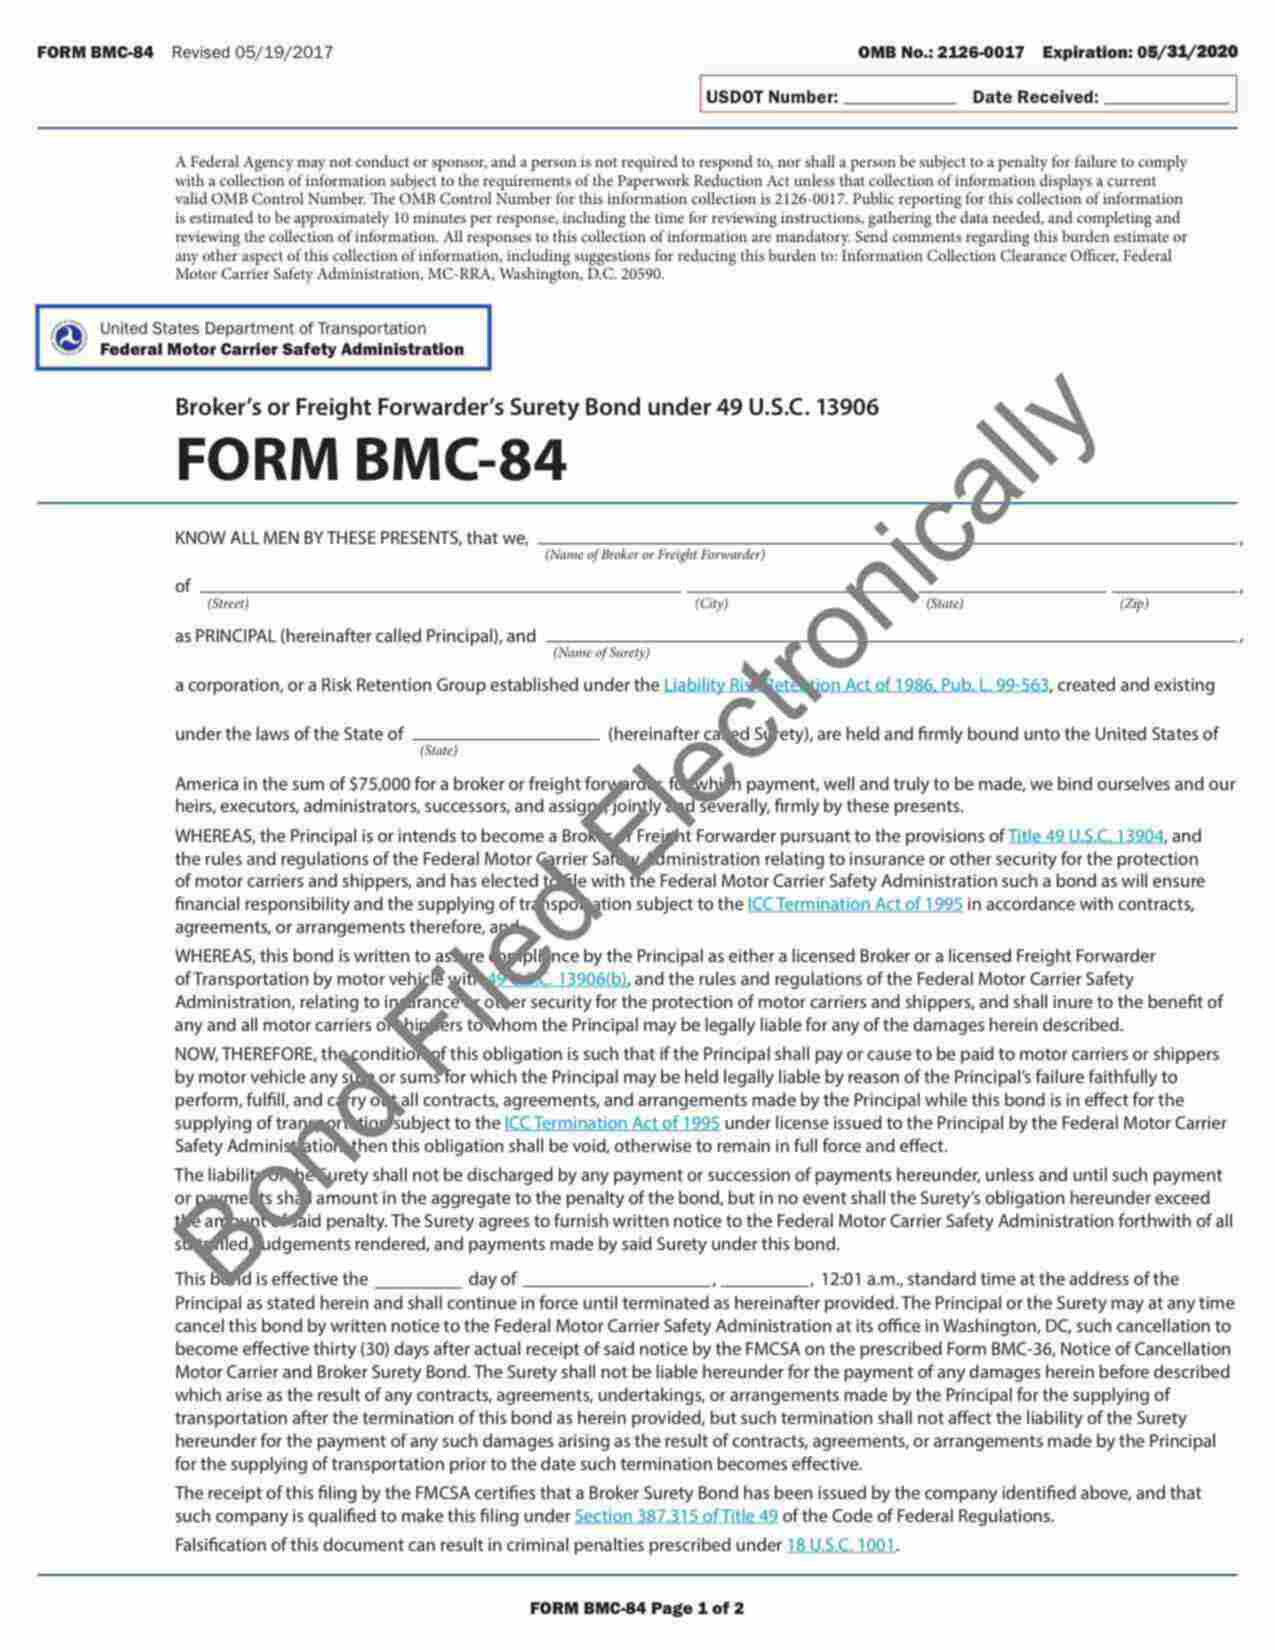 Utah Property Broker or Freight Forwarder BMC-84 (ICC Broker) Bond Form